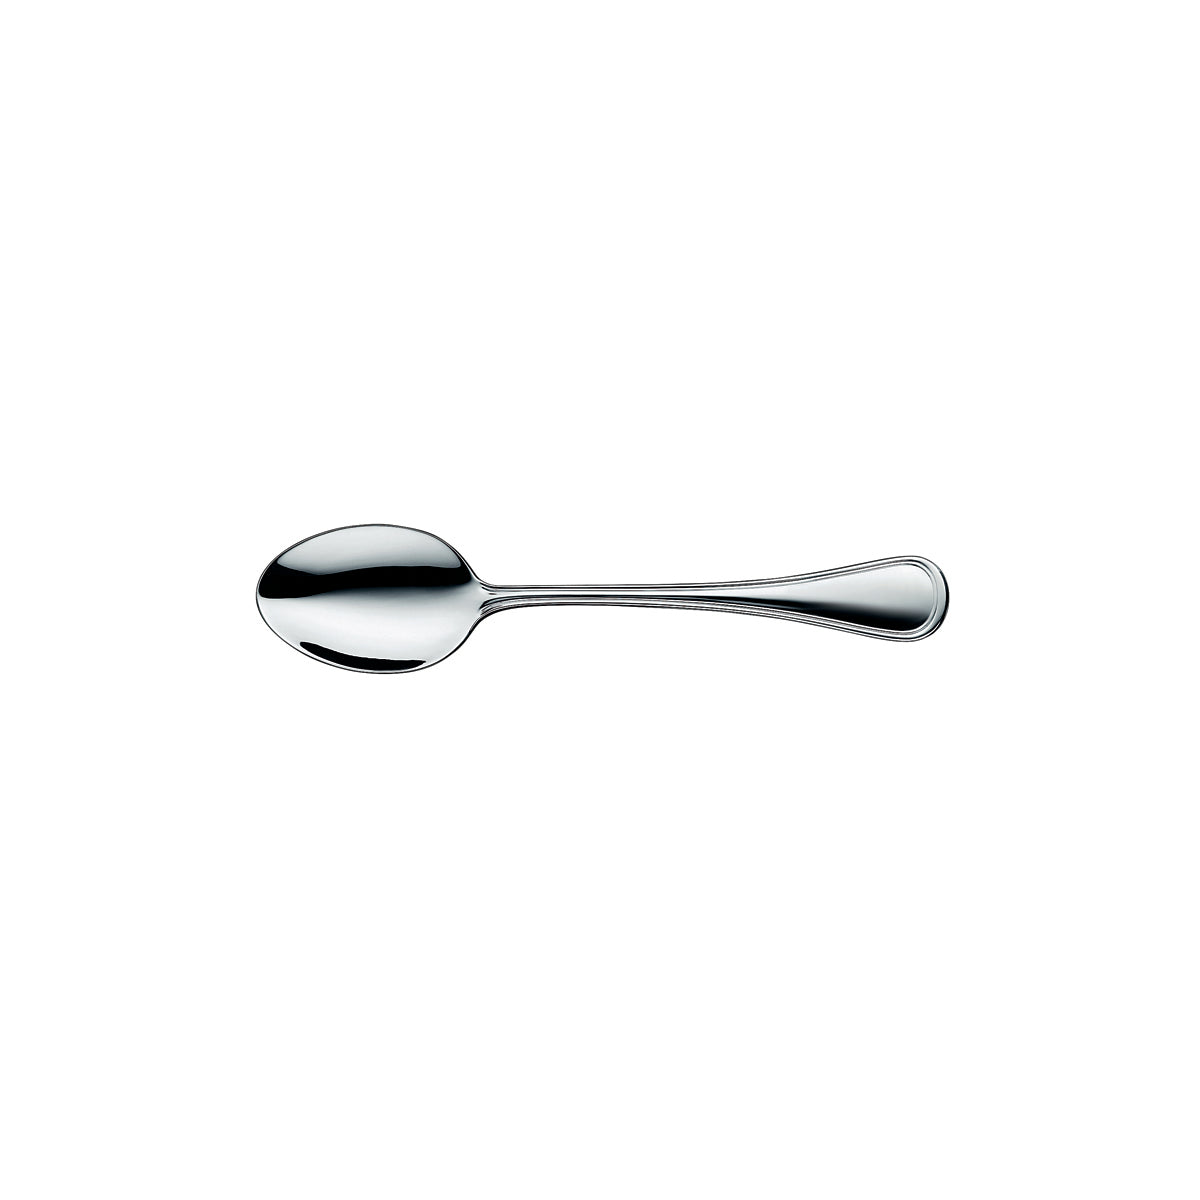 10.0201.6060 WMF Contour Table Spoon Silverplated Tomkin Australia Hospitality Supplies